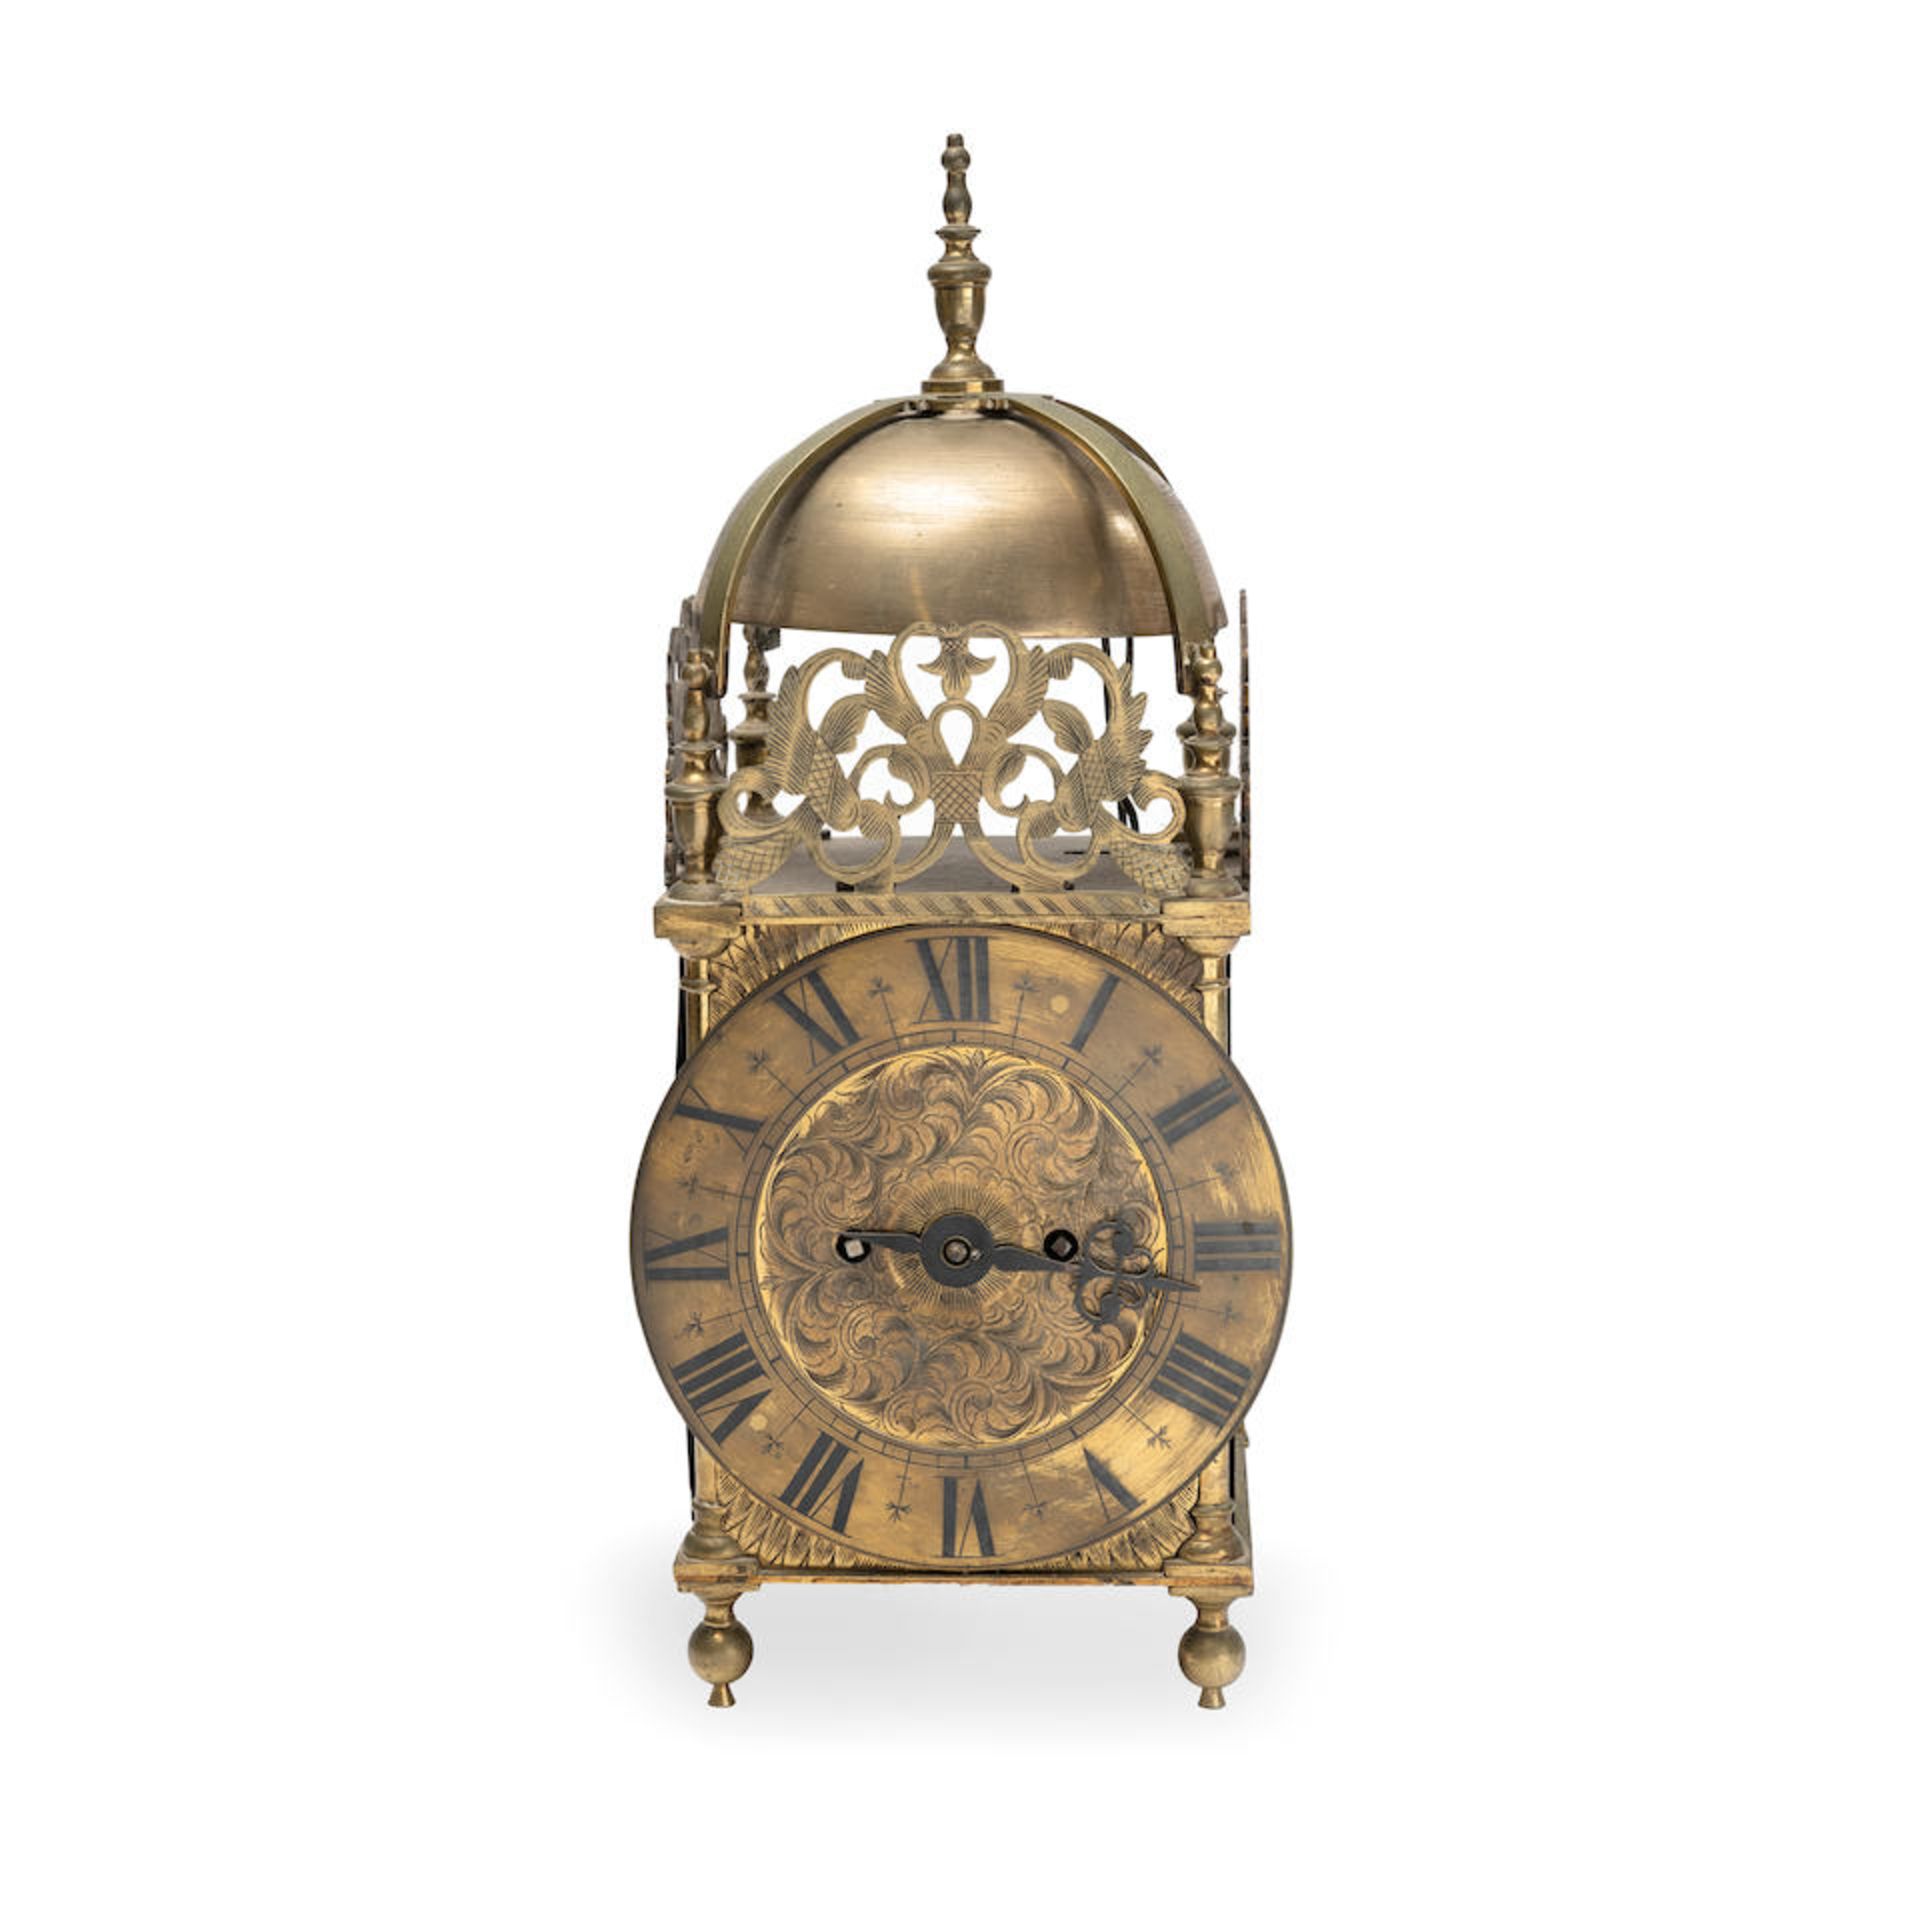 A 19th century brass lantern clock in the 17th century style